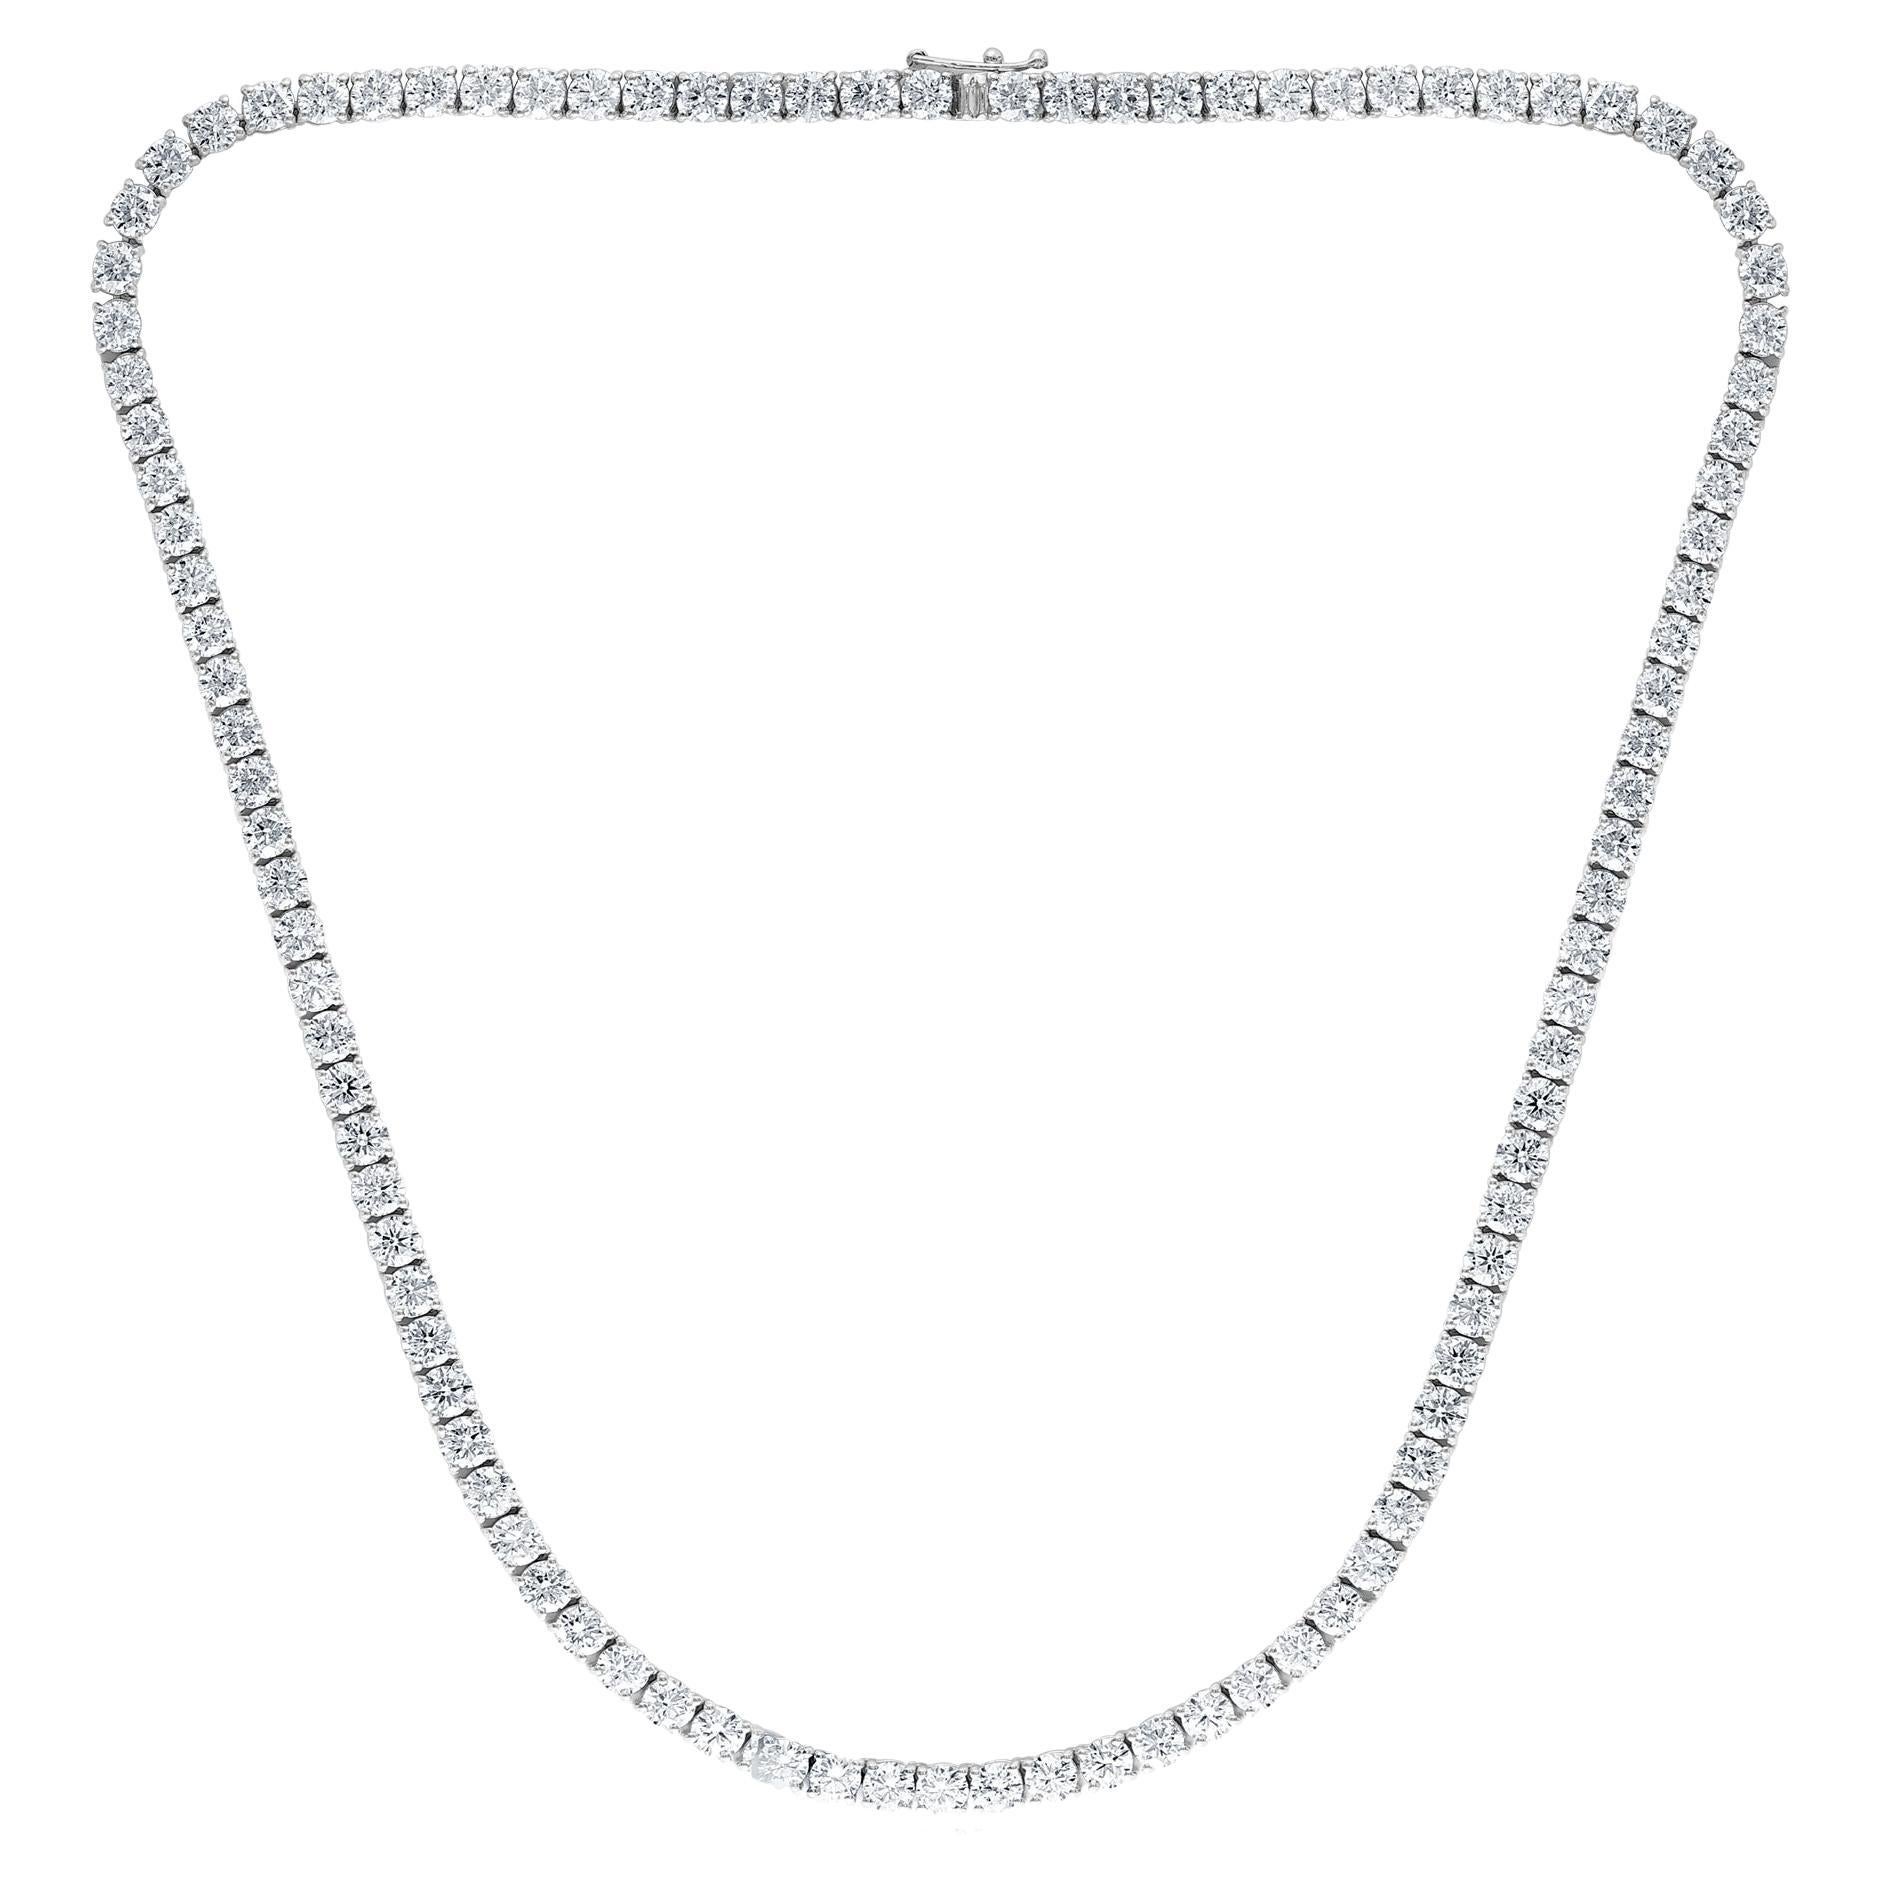 25.03 Carat Diamond Tennis Necklace in 14K White Gold